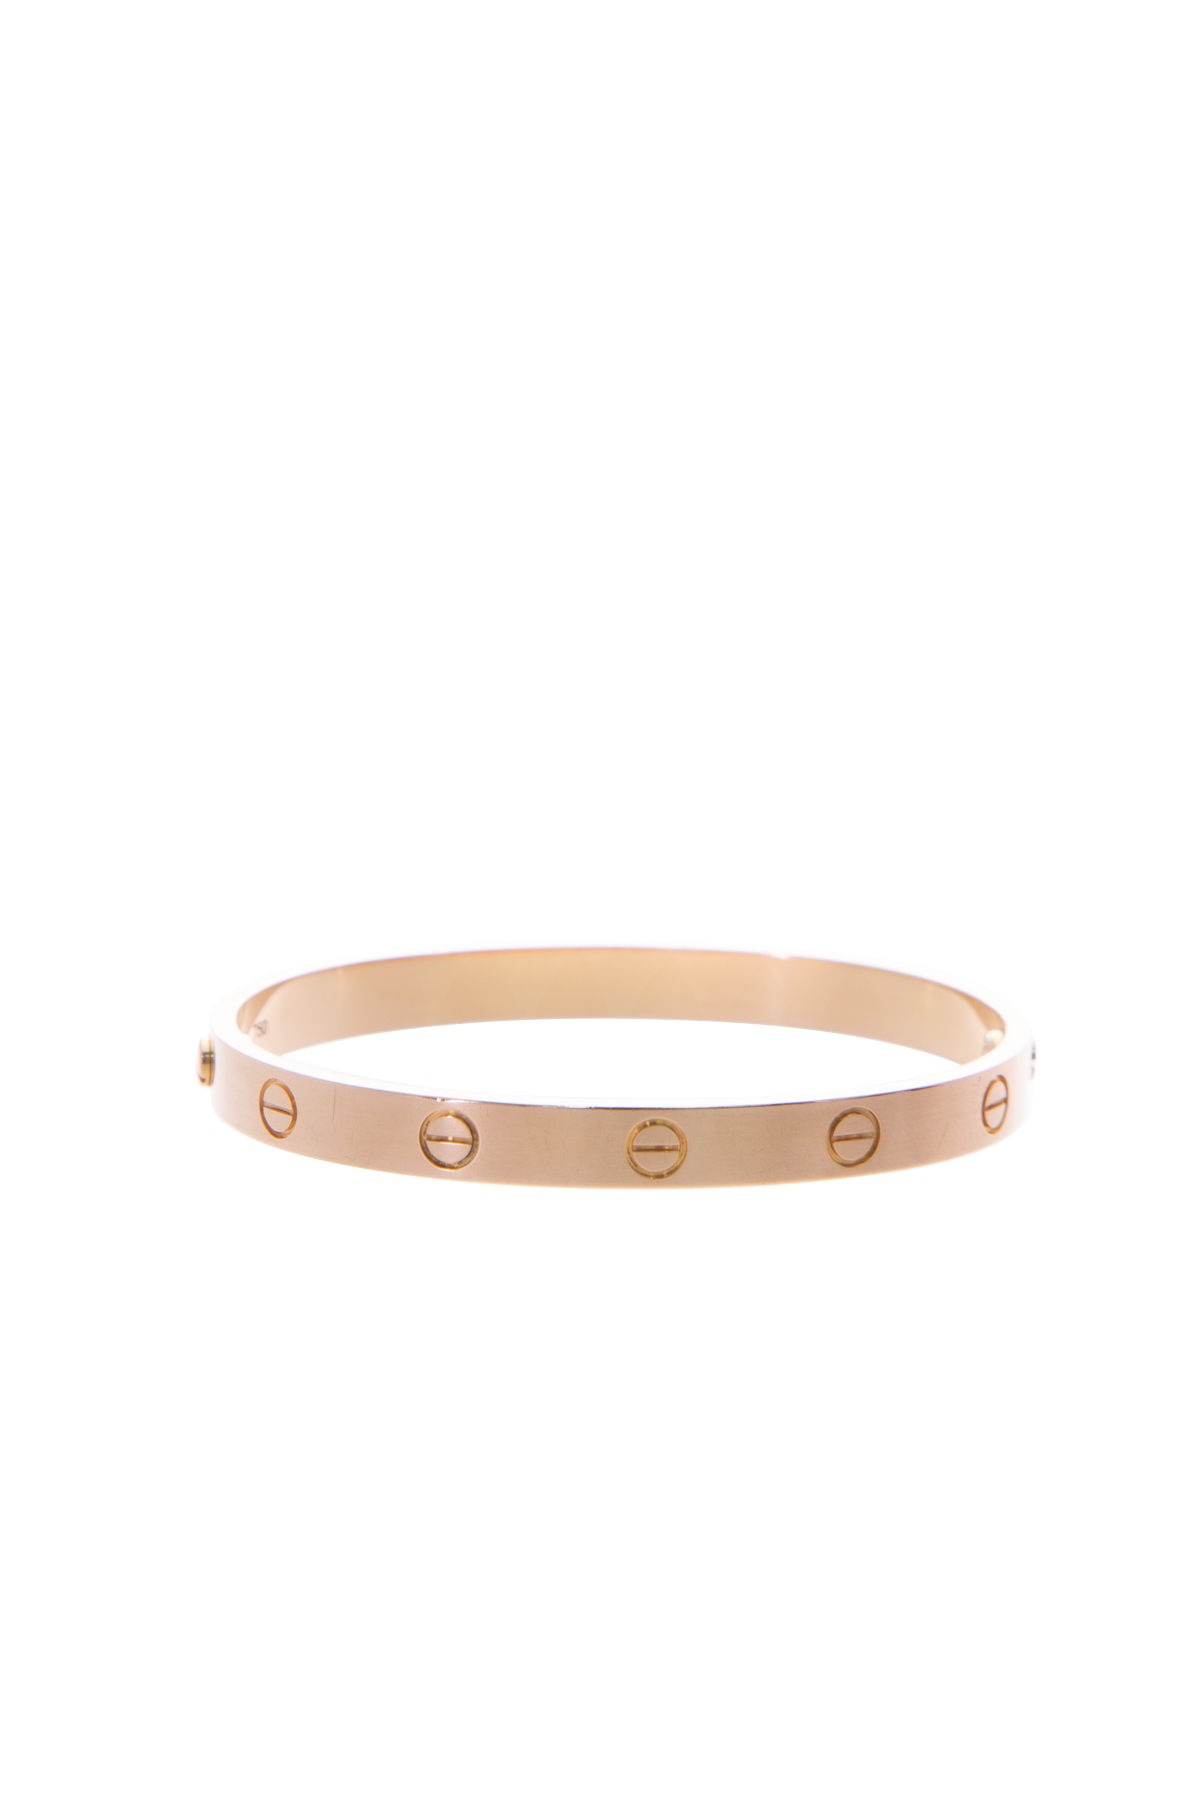 Cartier Love bracelet SM, size 17 – ICONICS LUXURY